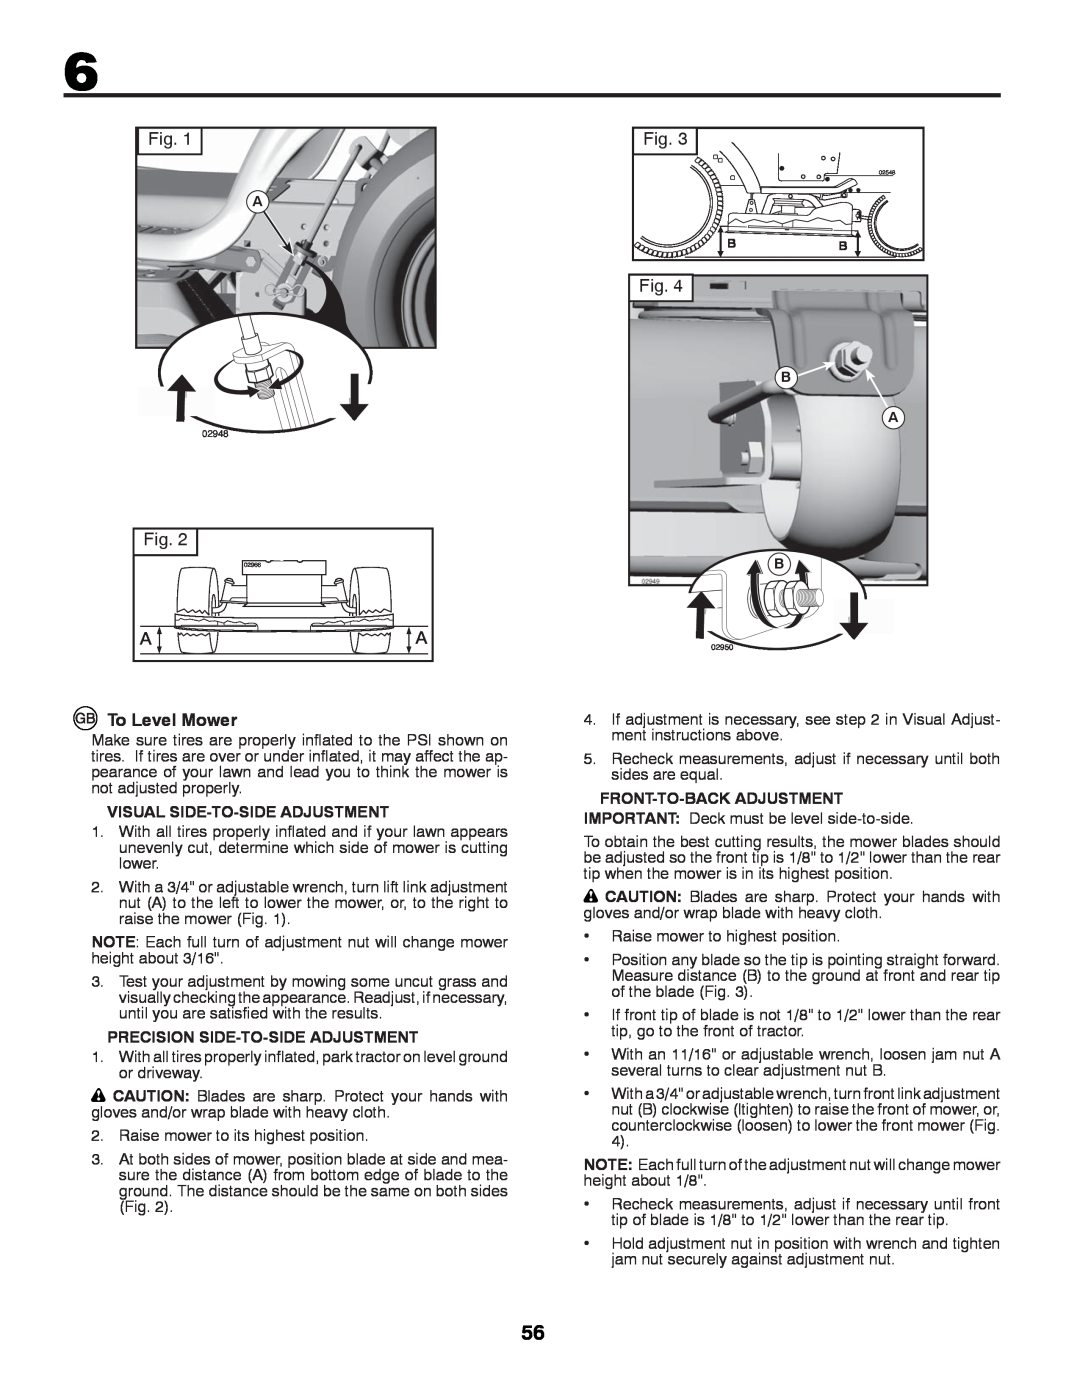 Husqvarna LTH152 instruction manual To Level Mower, Visual Side-To-Side Adjustment, Precision Side-To-Side Adjustment 